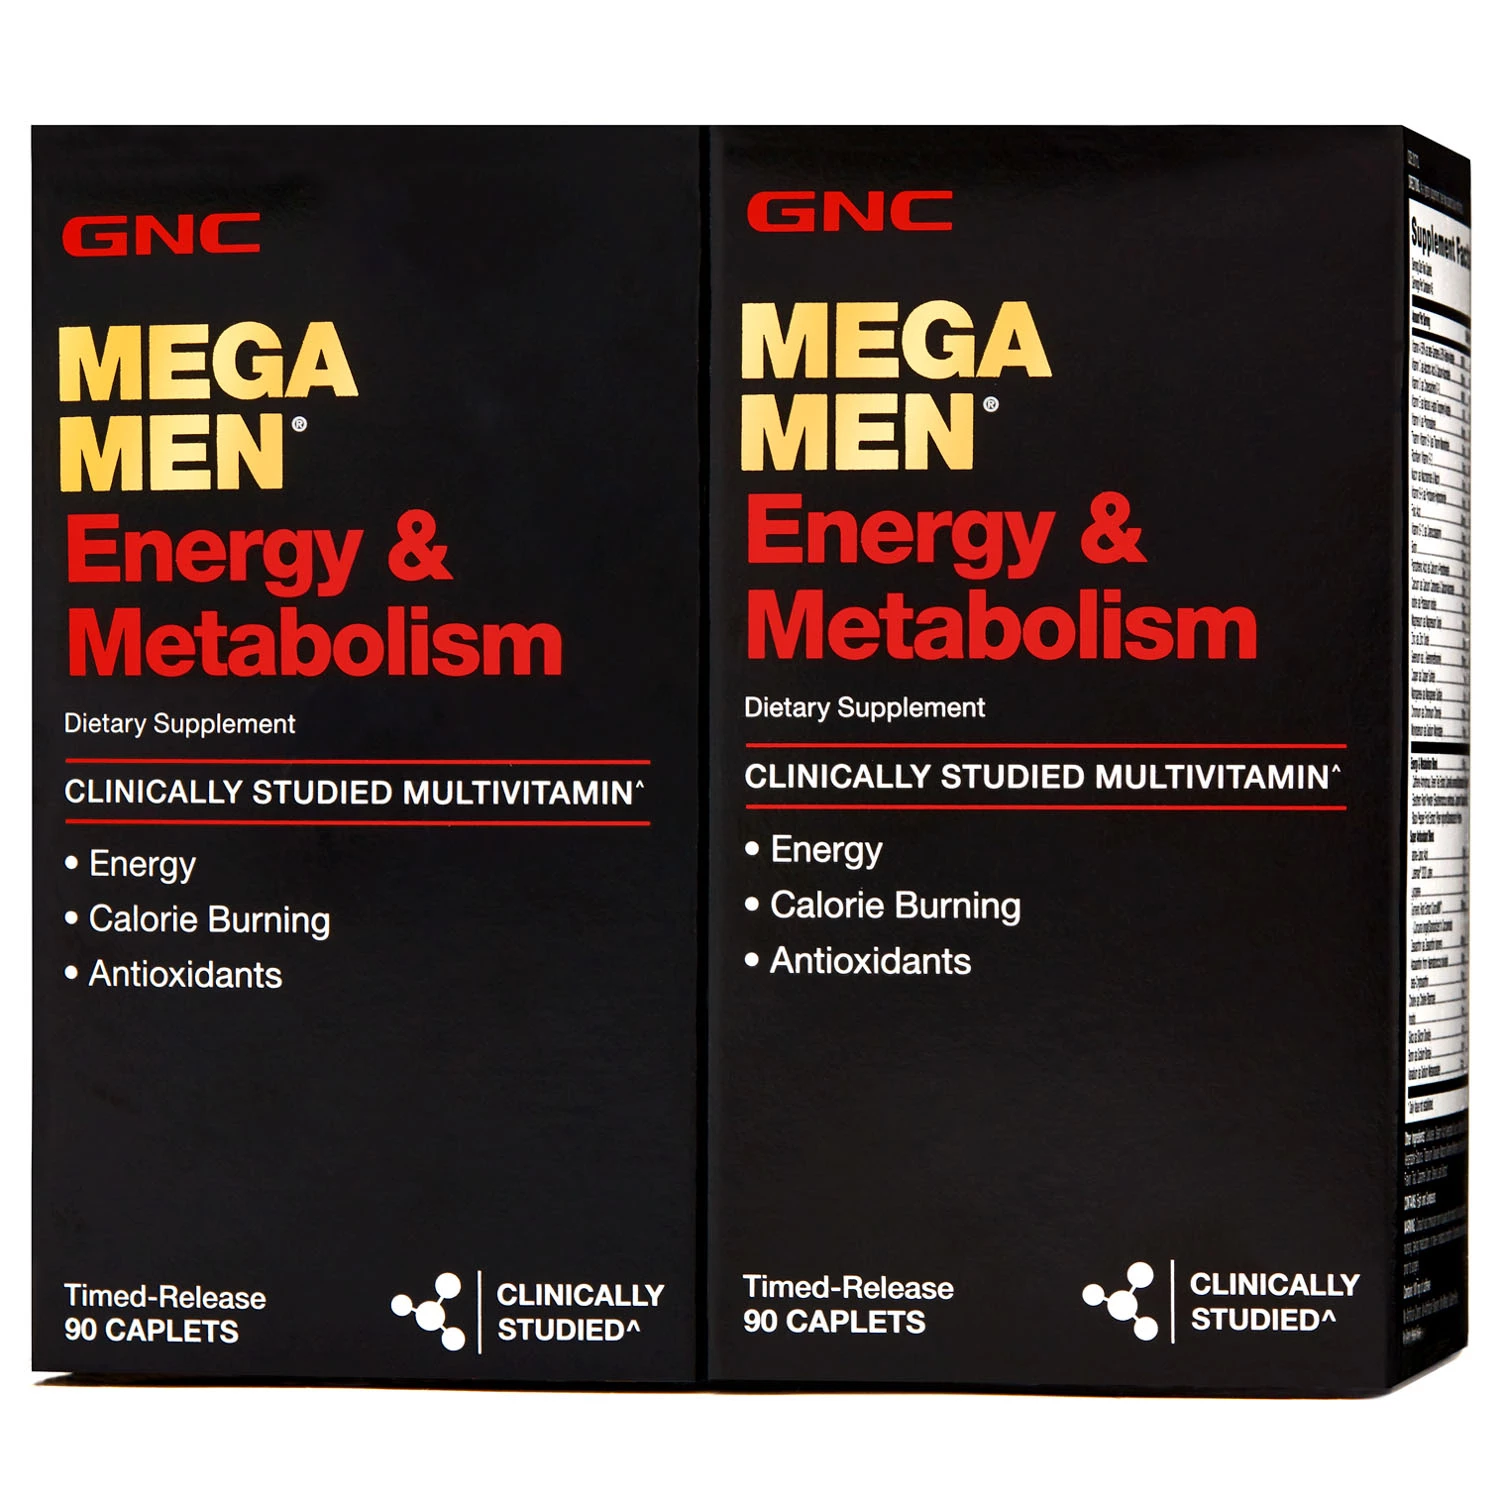 GNC Mega Men Energy & Metabolism Multivitamins, 180 ct.